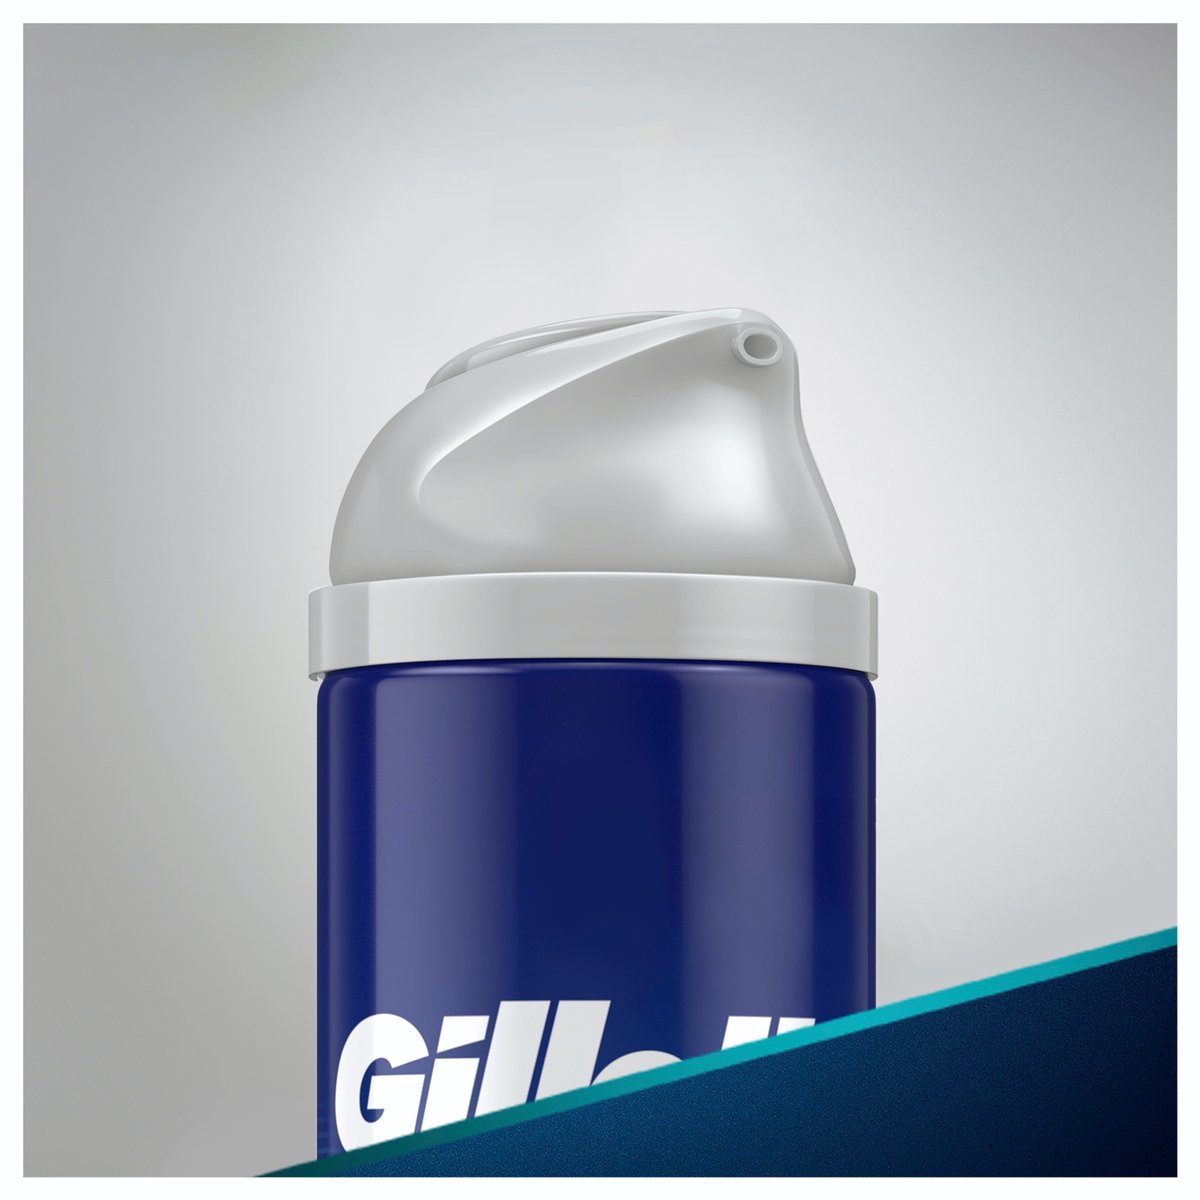 Gillette Series Conditioning Shaving Foam 2 x 250 ml